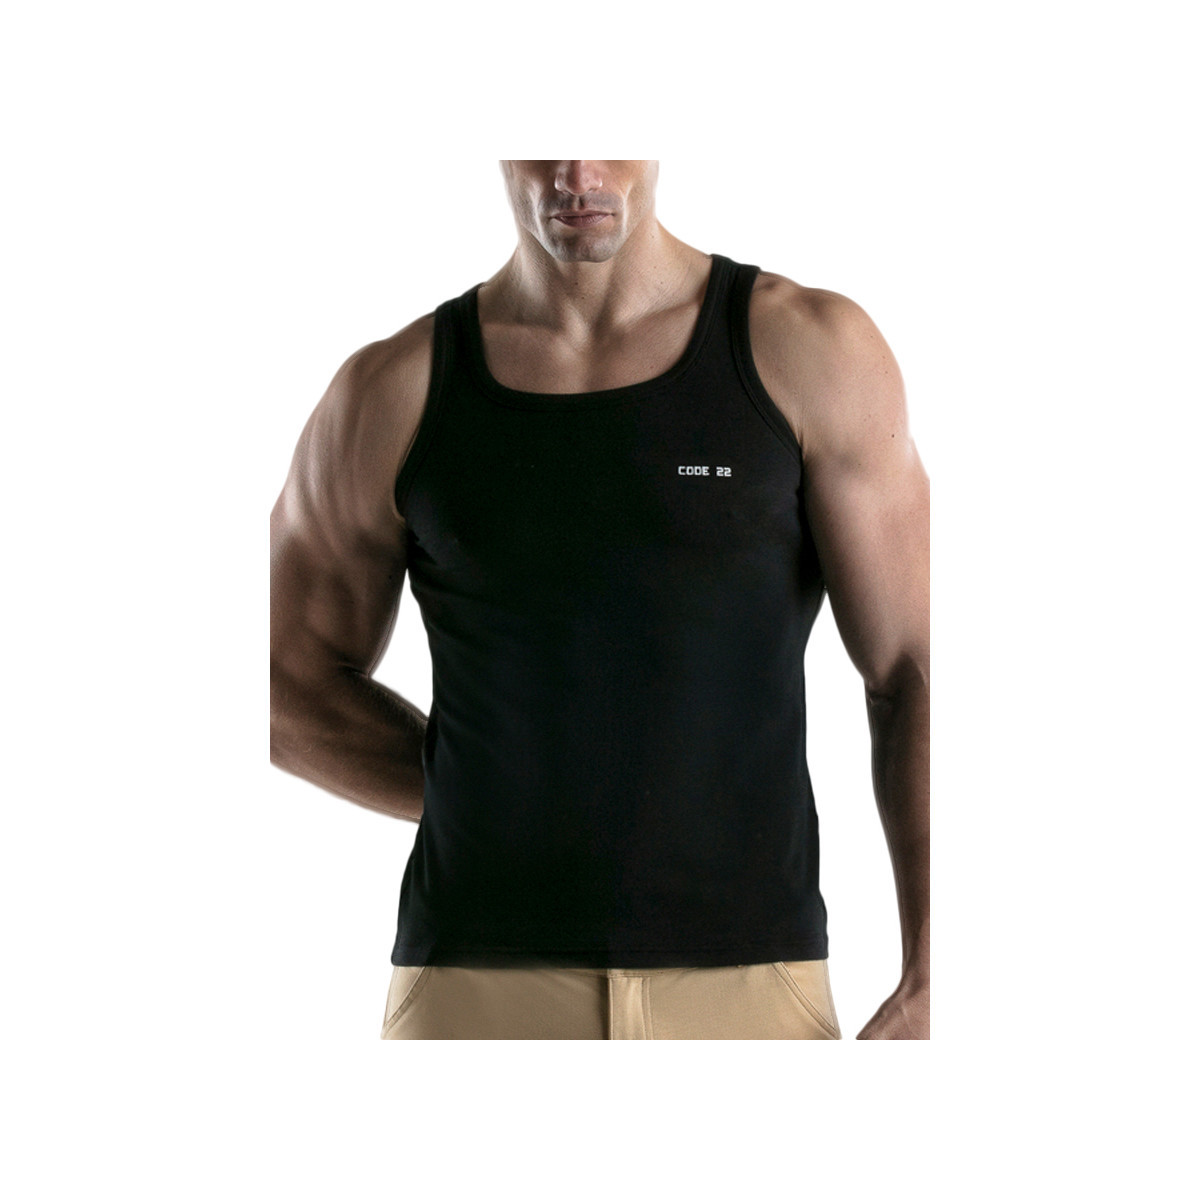 Vêtements Homme Classic collared shirt cut in a cotton-linen blend fabrication Débardeur Basic Ditsy22 Noir